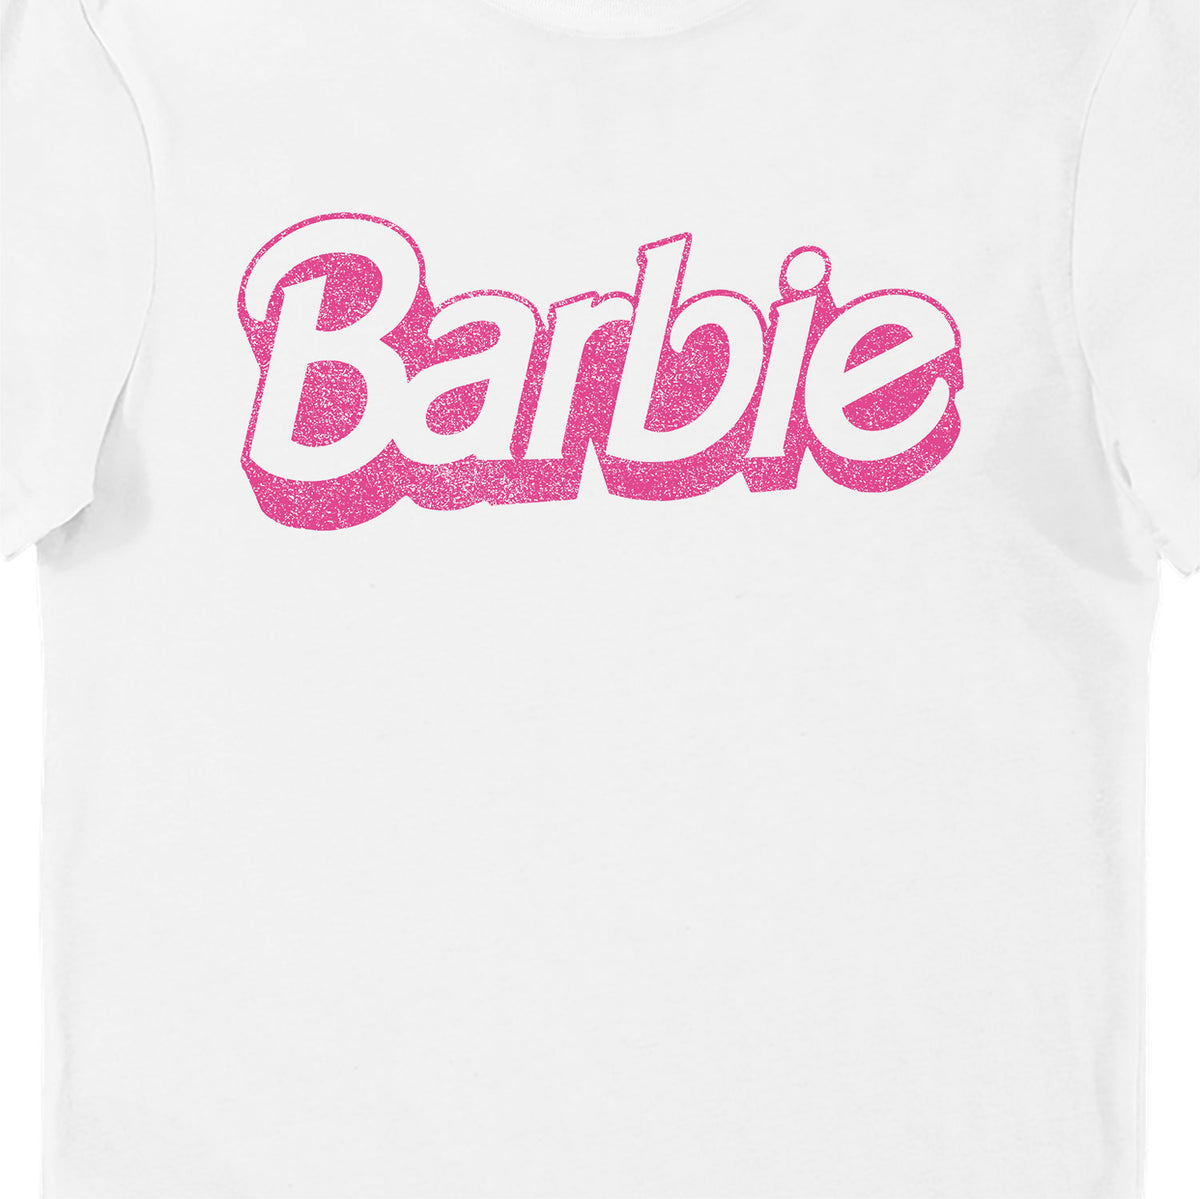 Barbie Distressed Logo Unisex T-Shirt